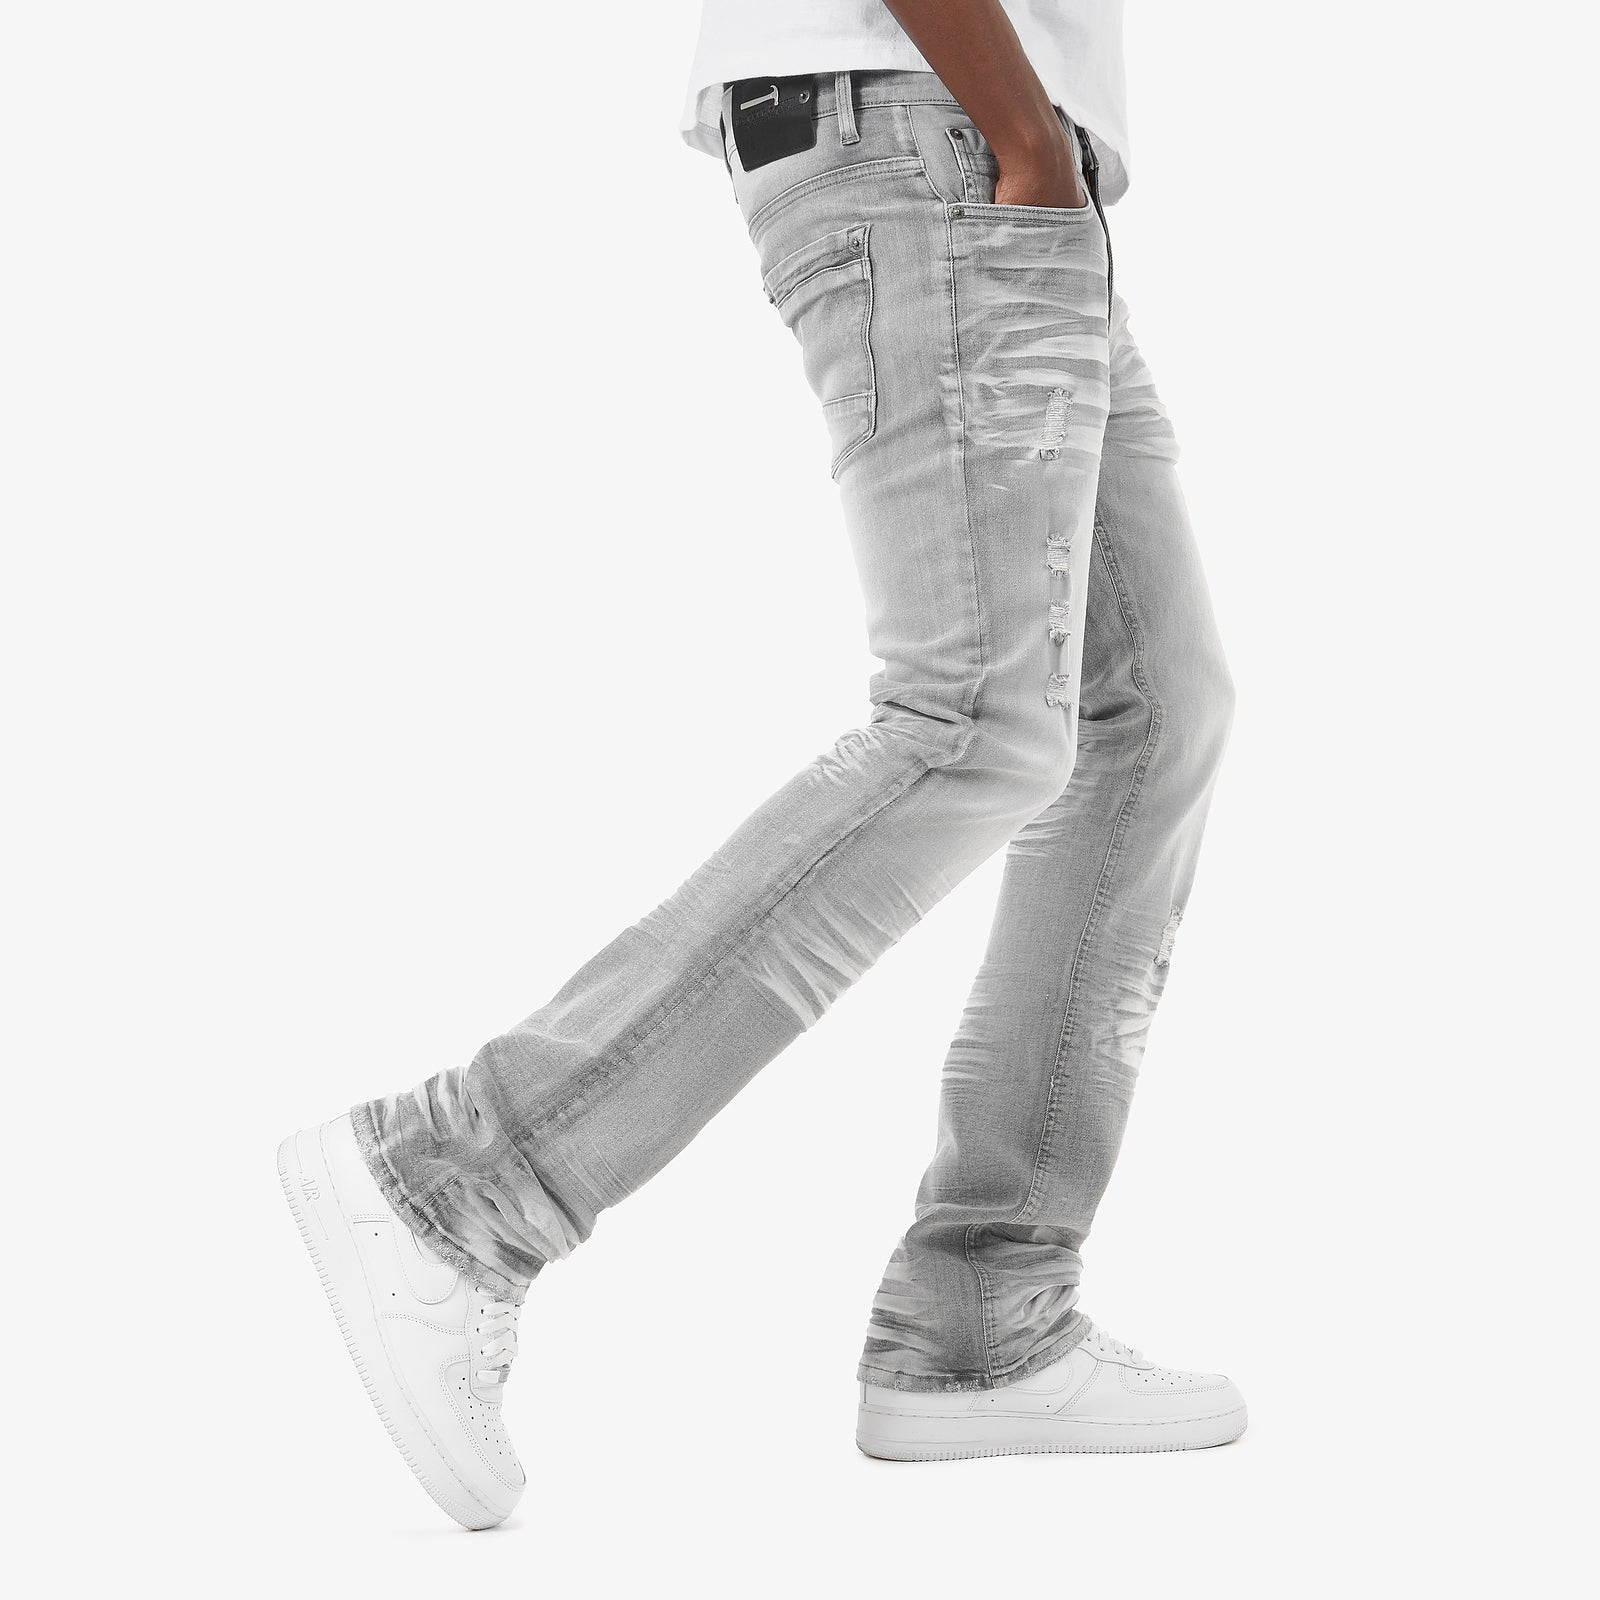 comfits Slim Men Dark Grey Jeans - Buy comfits Slim Men Dark Grey Jeans  Online at Best Prices in India | Flipkart.com